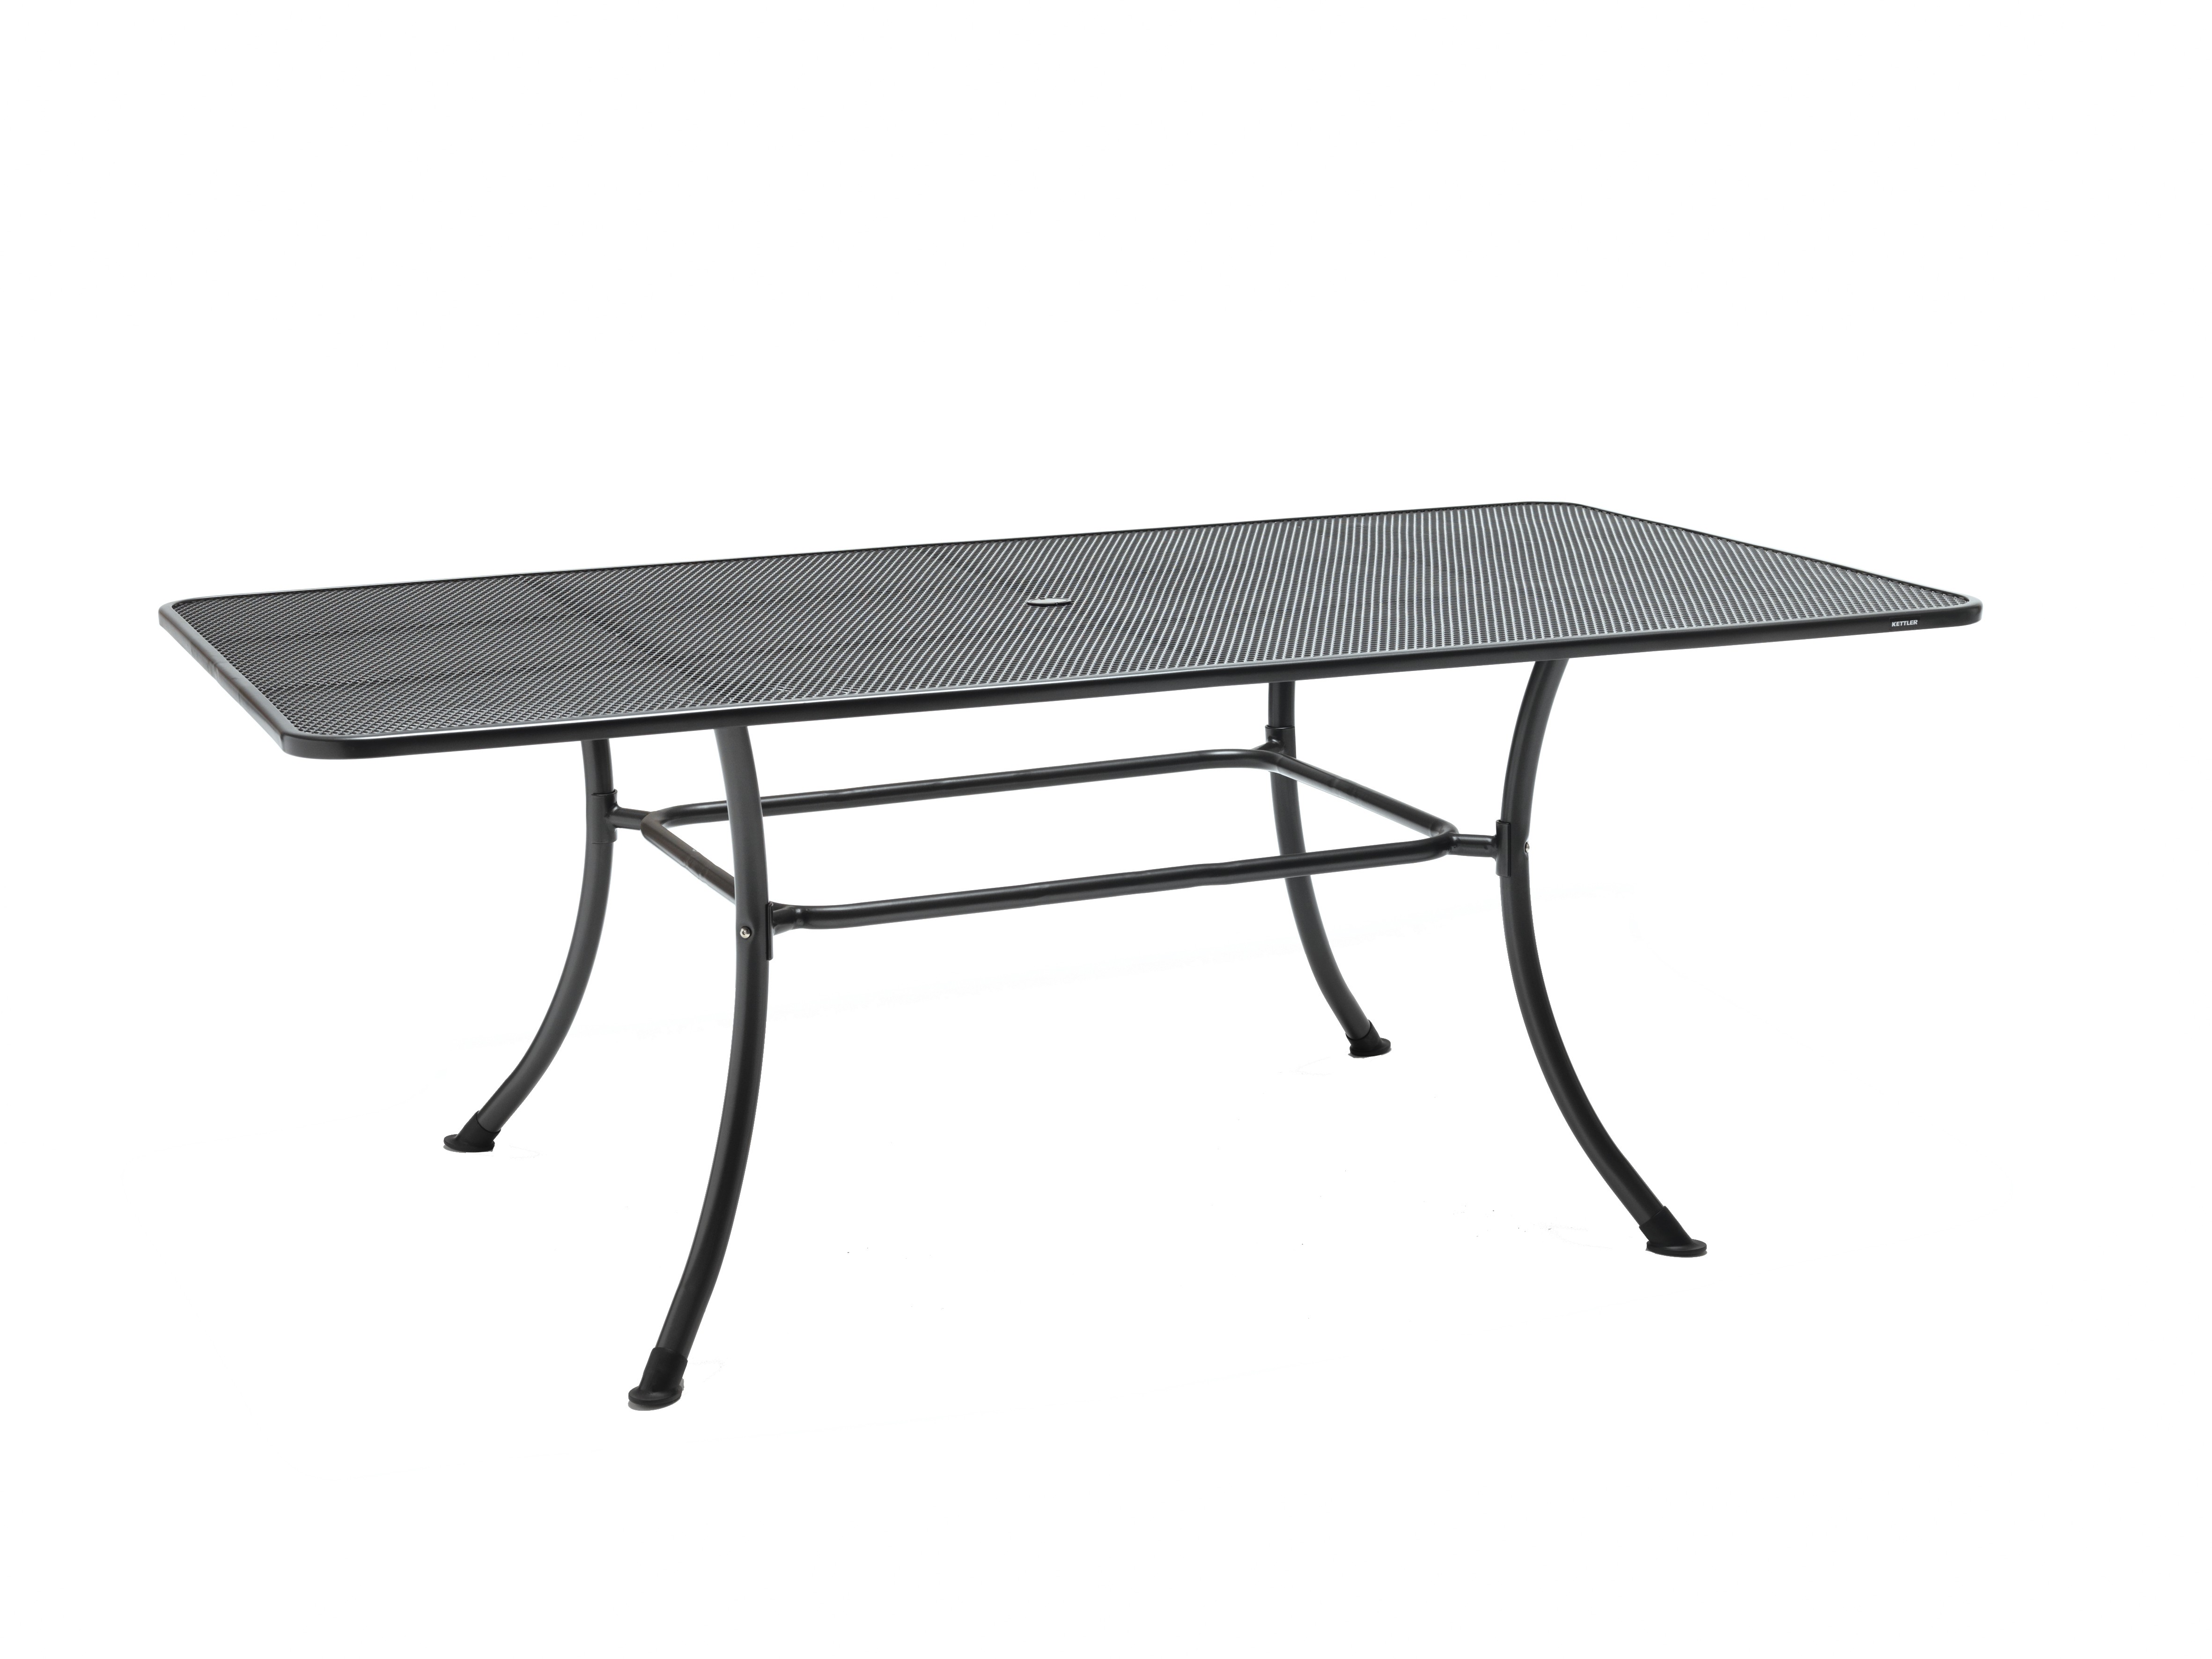 RECTANGULAR TABLES
Sizes: 57″ – 79″
